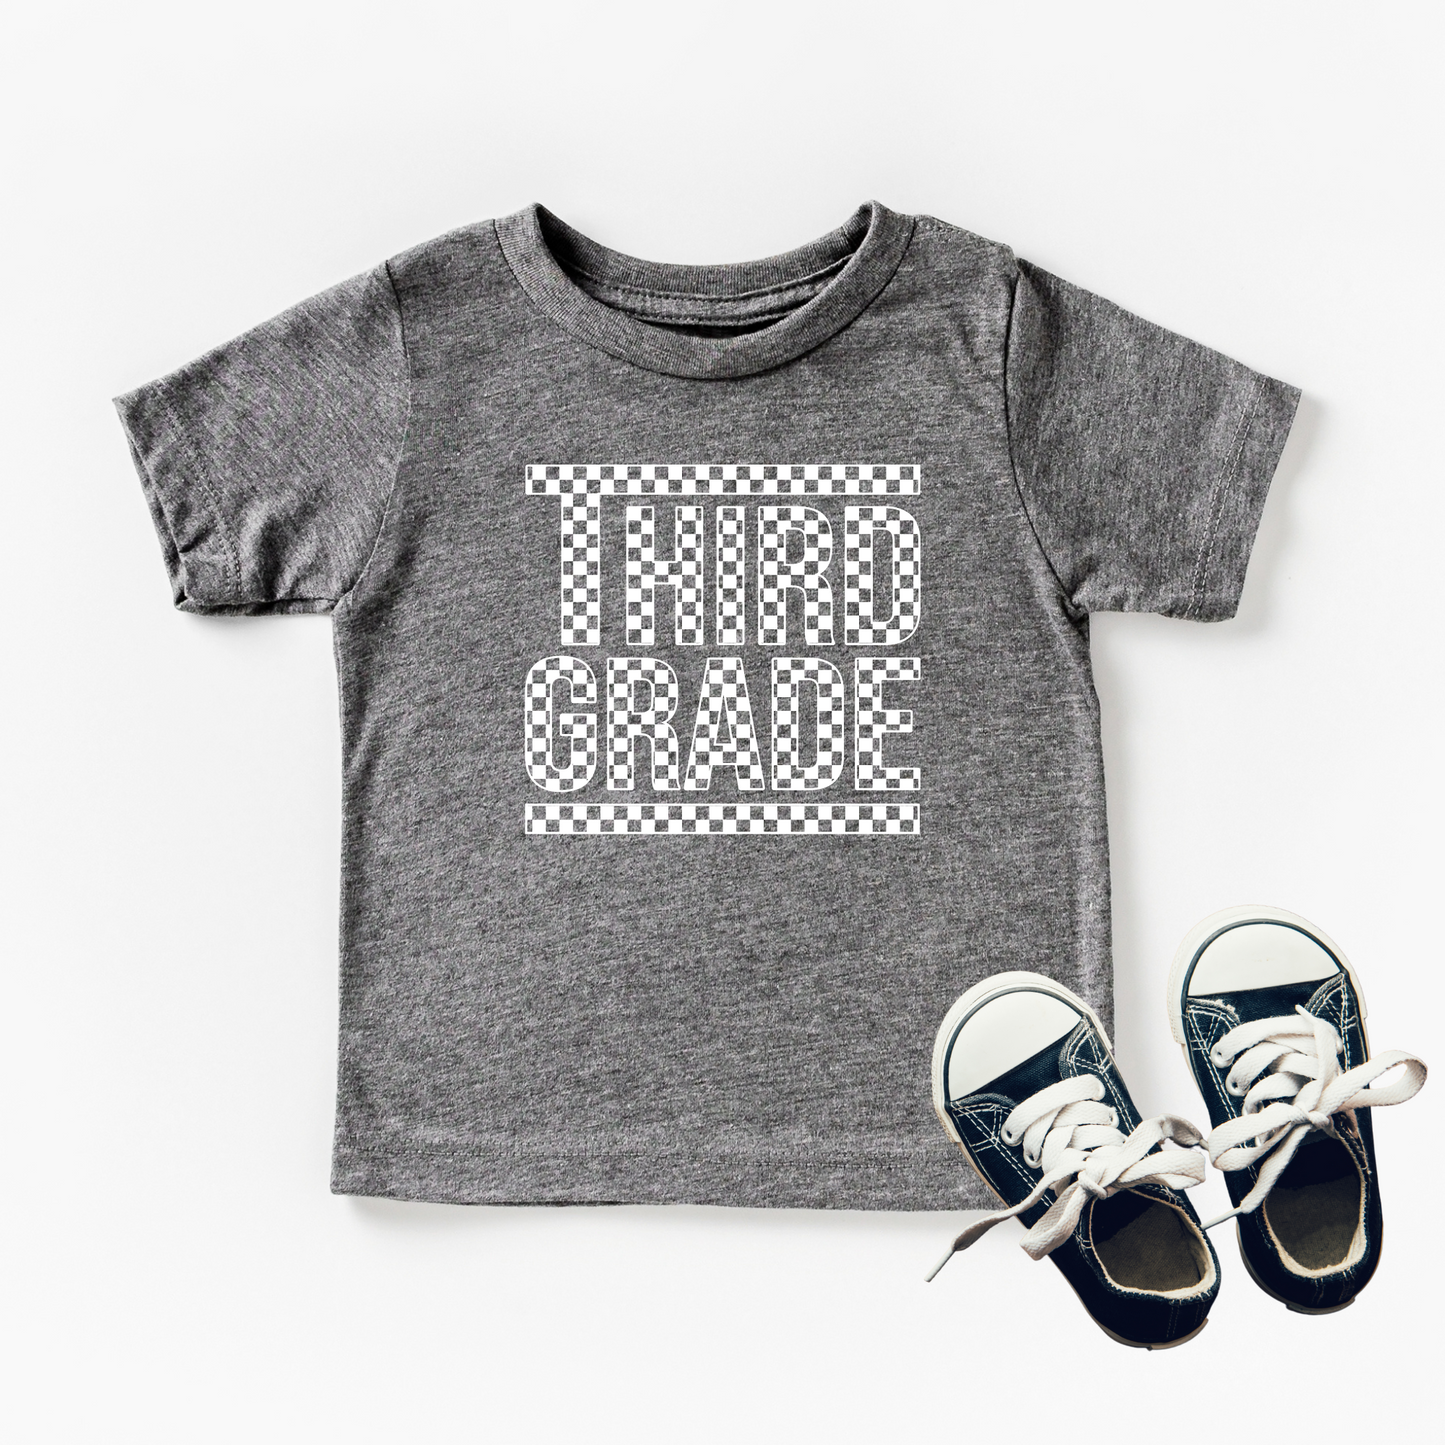 Third Grade | Short Sleeve Youth Tee